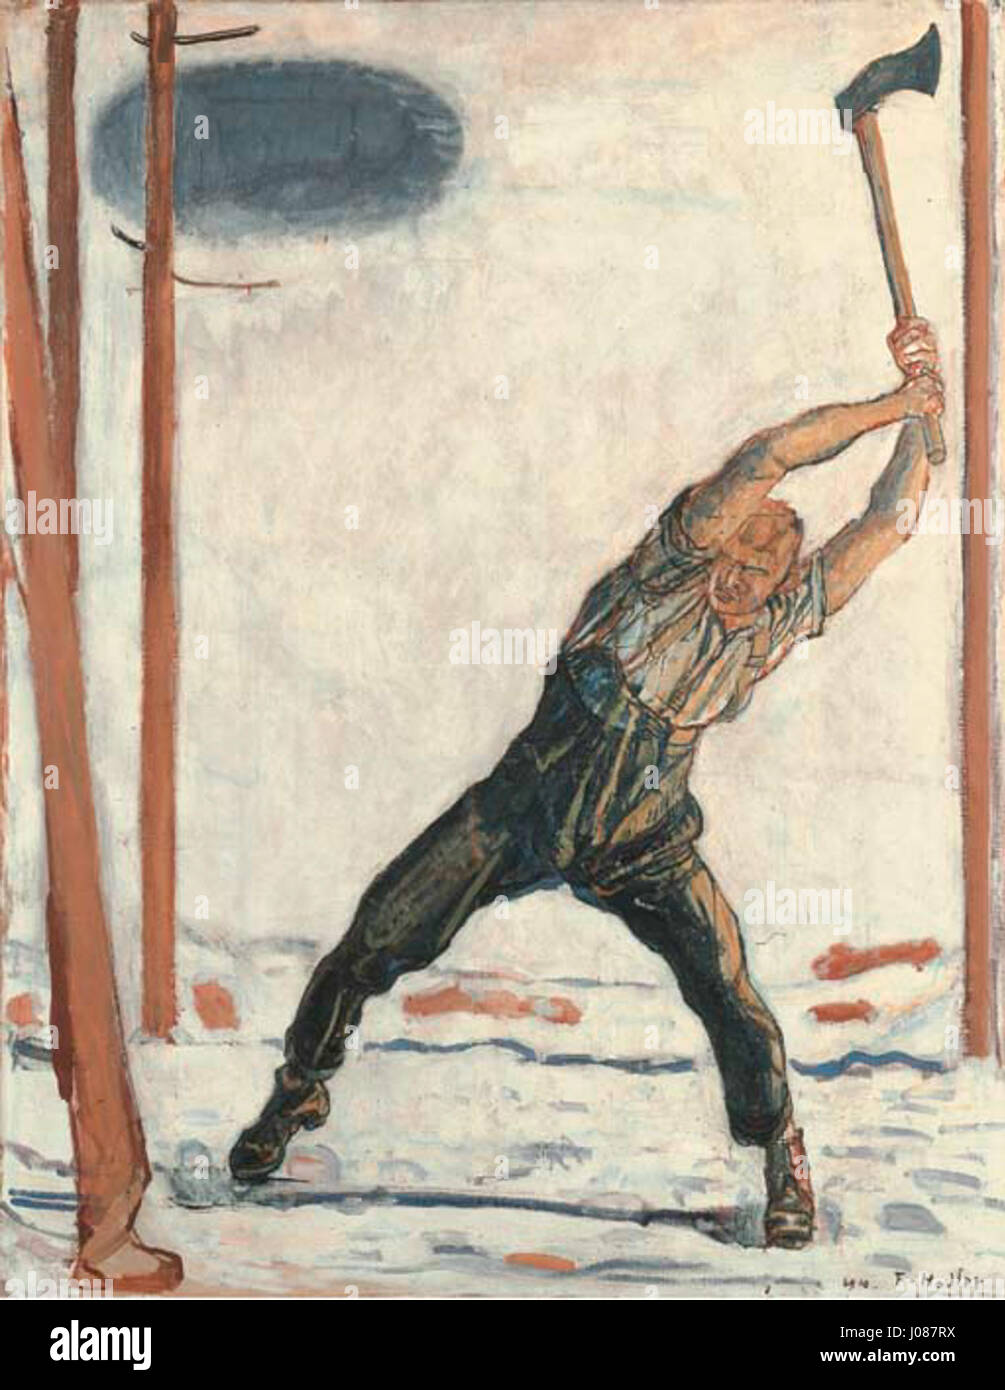 Ferdinand Hodler - Der Holzfäller, 1910 Stock Photo